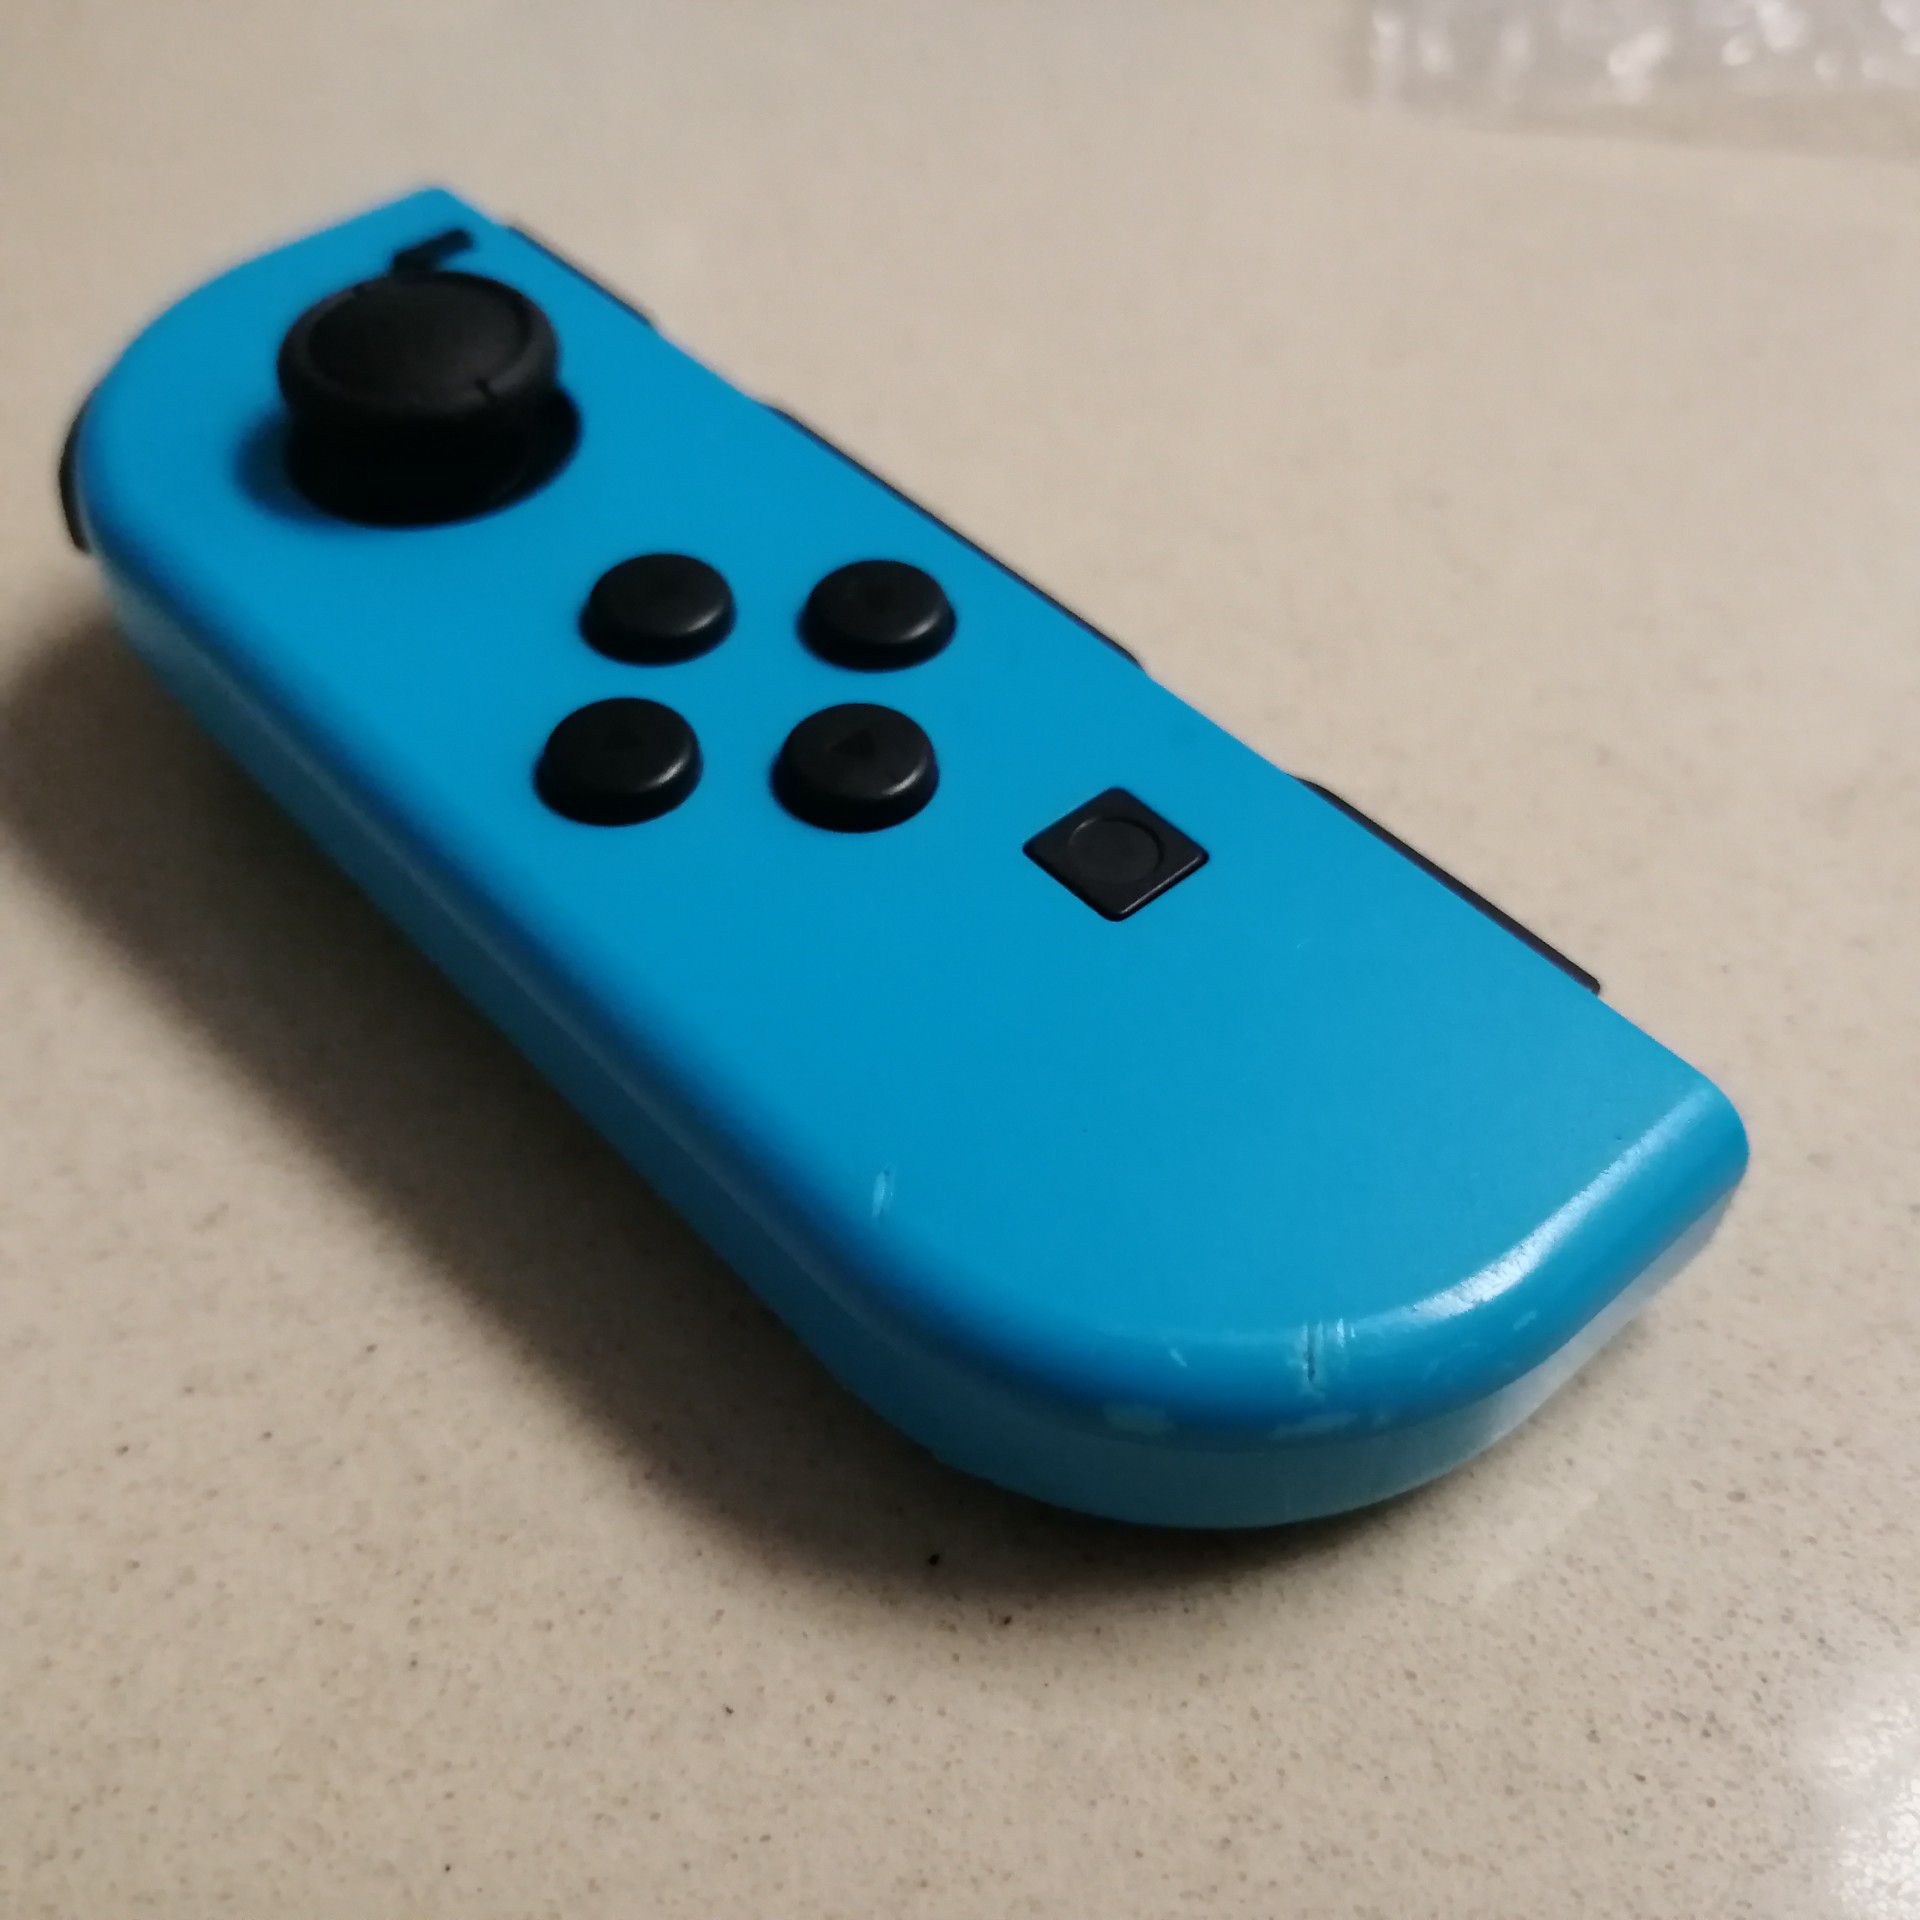 Nintendo Switch Left joy-con (Pending Sale)